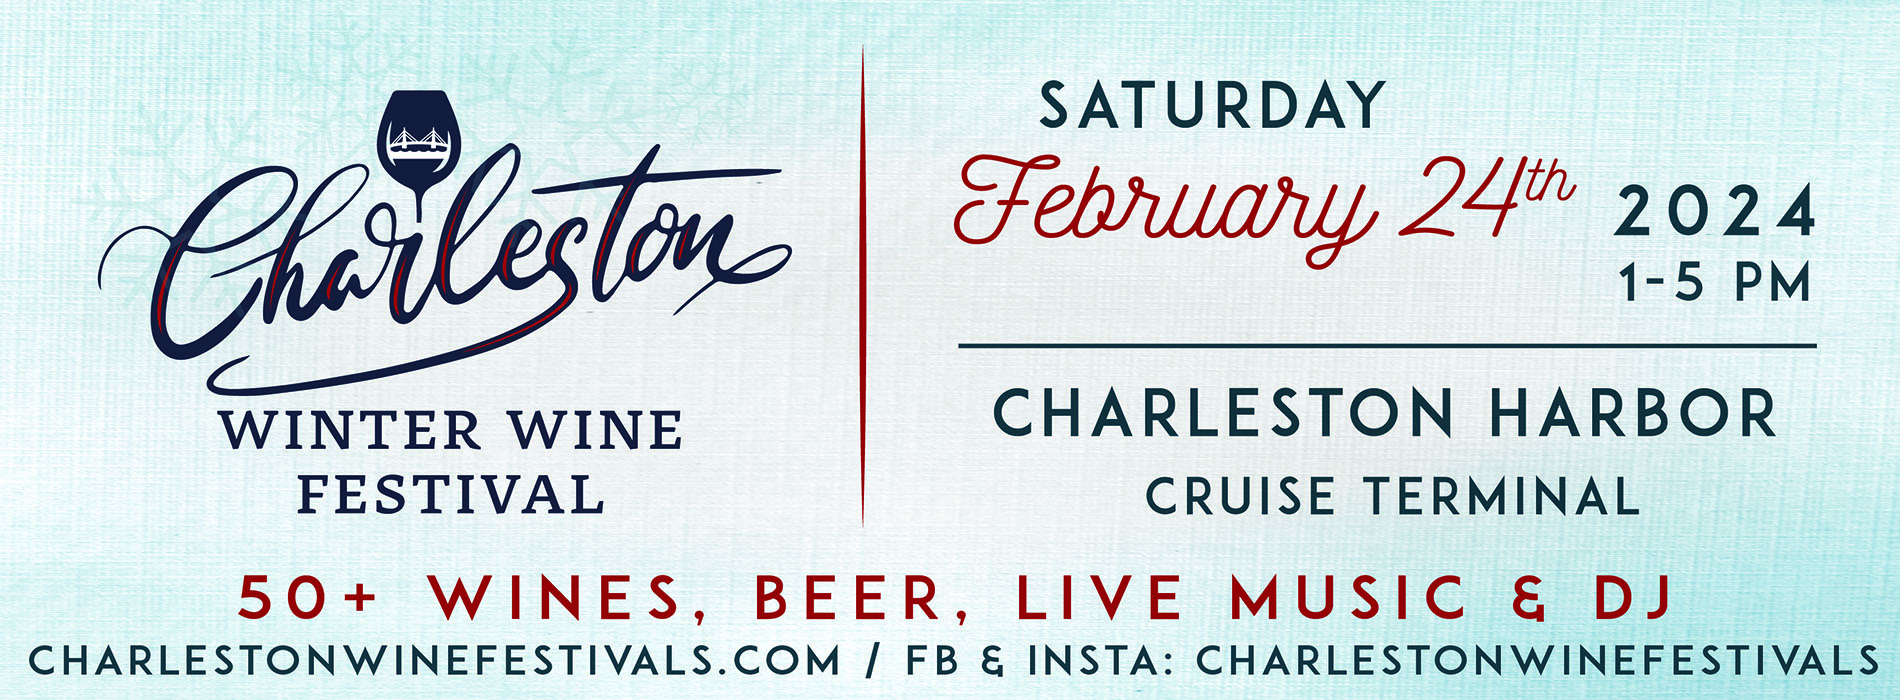 Winter Wine Festival new location is Charelston Harbor Cruise terminal